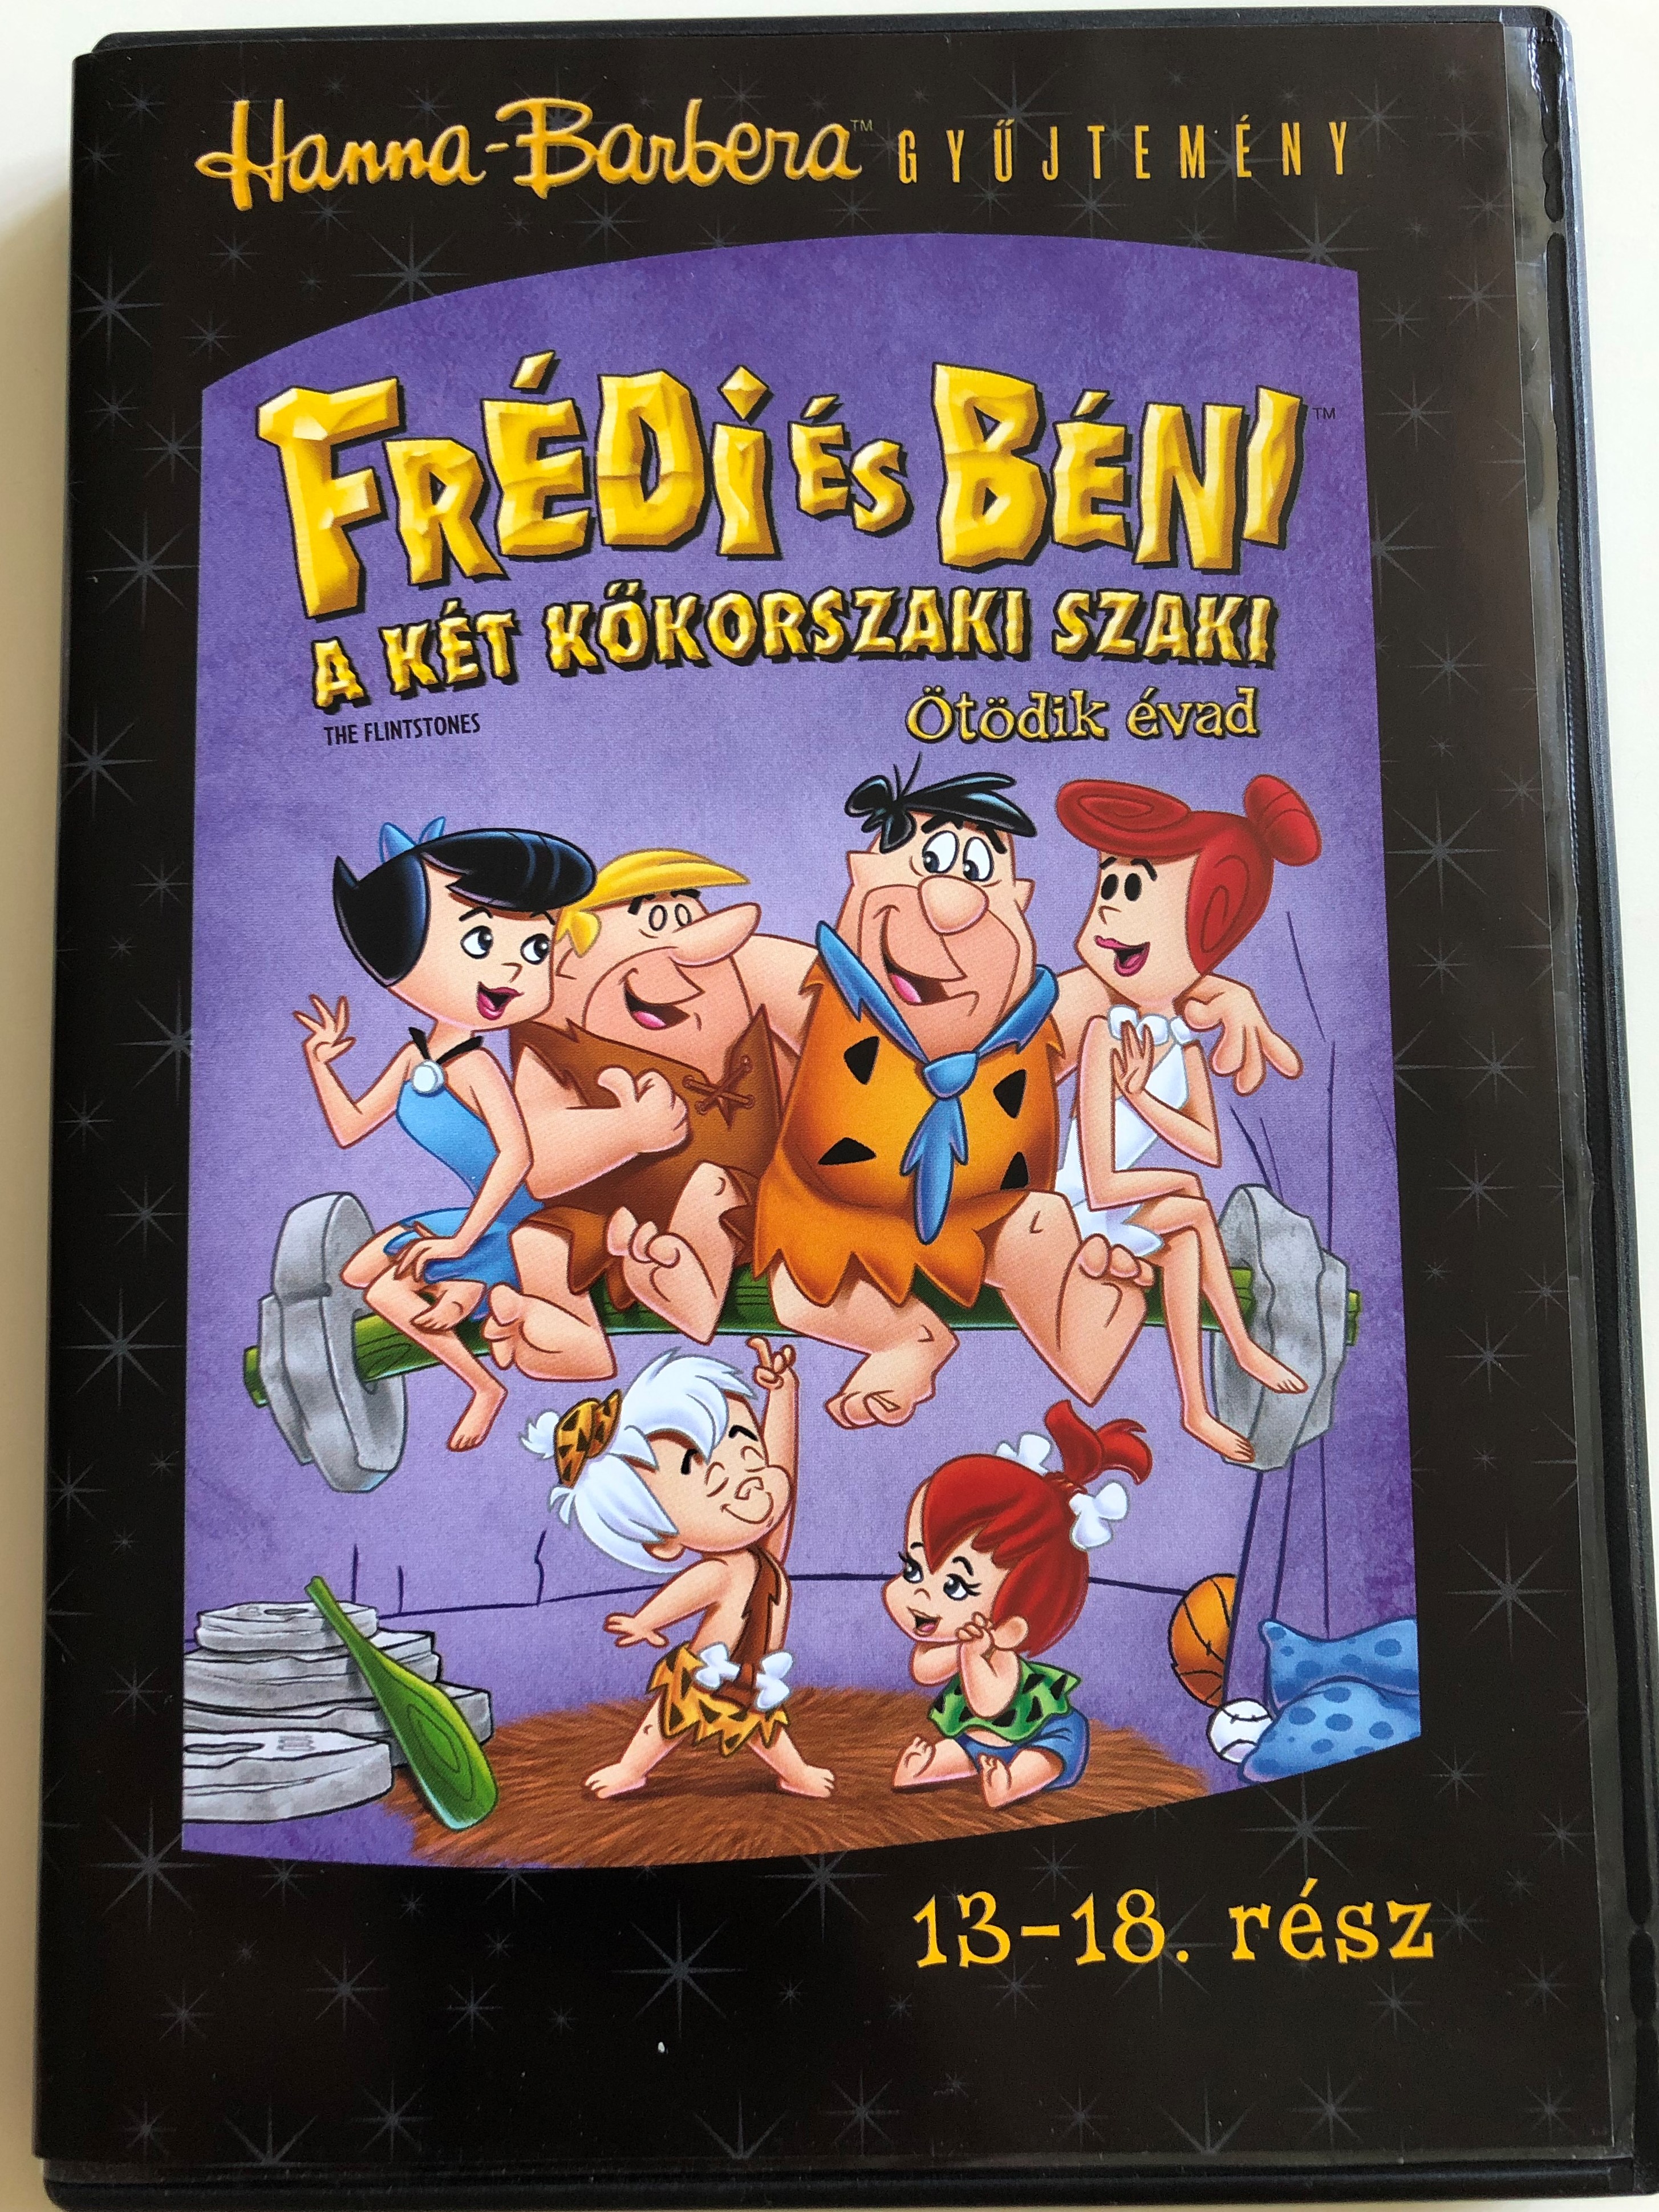 the-flintstones-season-5-dvd-1966-fr-di-s-b-ni-a-k-t-k-korszaki-szaki-season-5-t-dik-vad-episodes-13-18-disc-3-hanna-barbera-animated-classic-1-.jpg